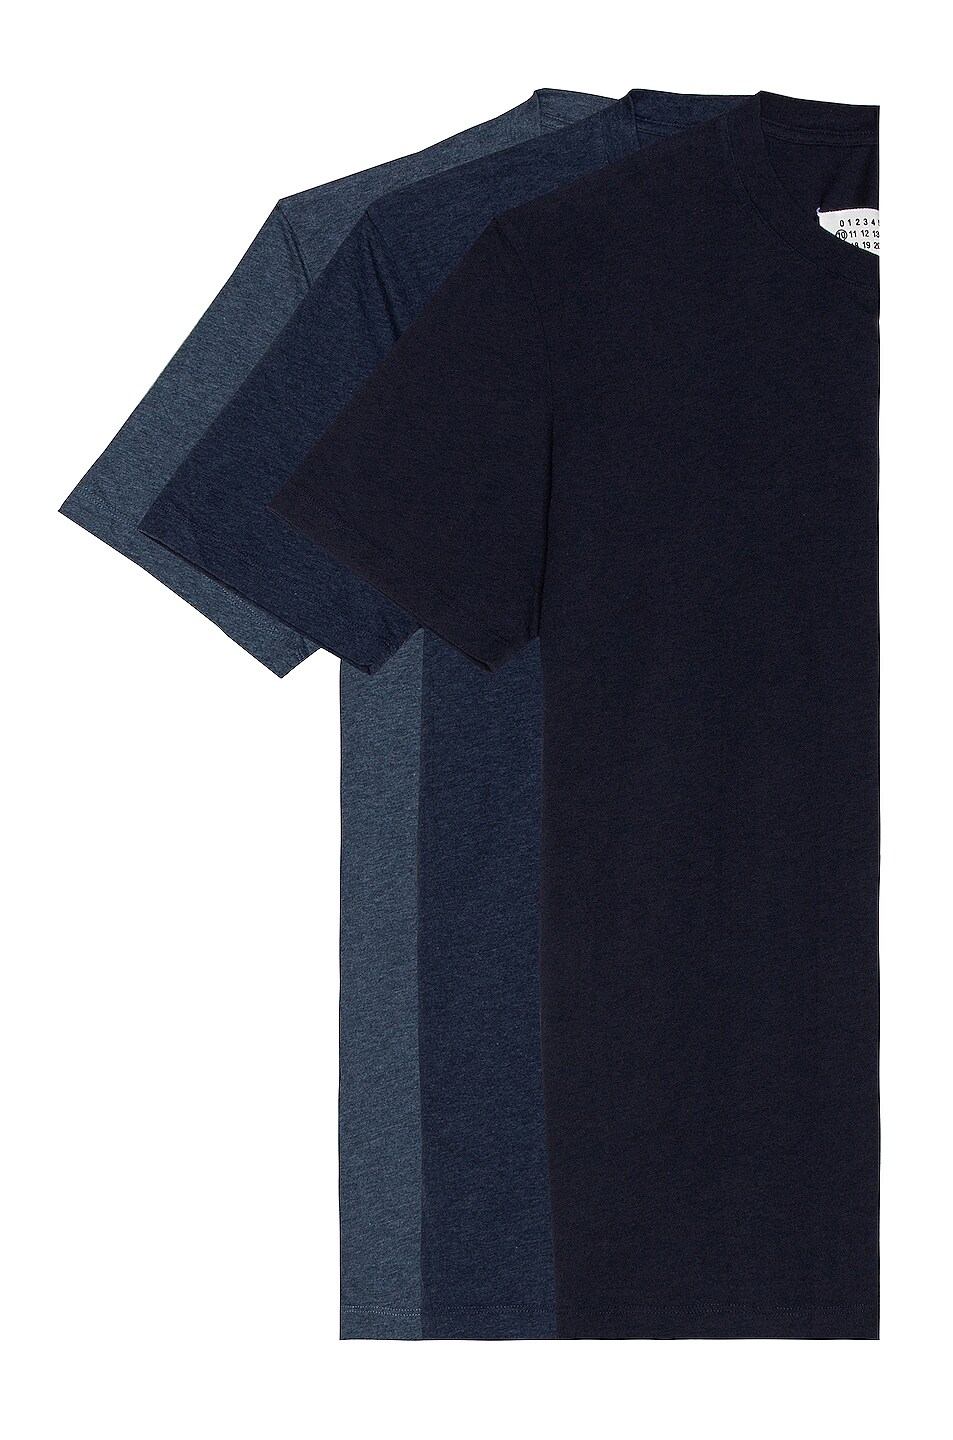 Image 1 of Maison Margiela 3 Pack Cotton Jersey in Light-Medium-Dark Indigo